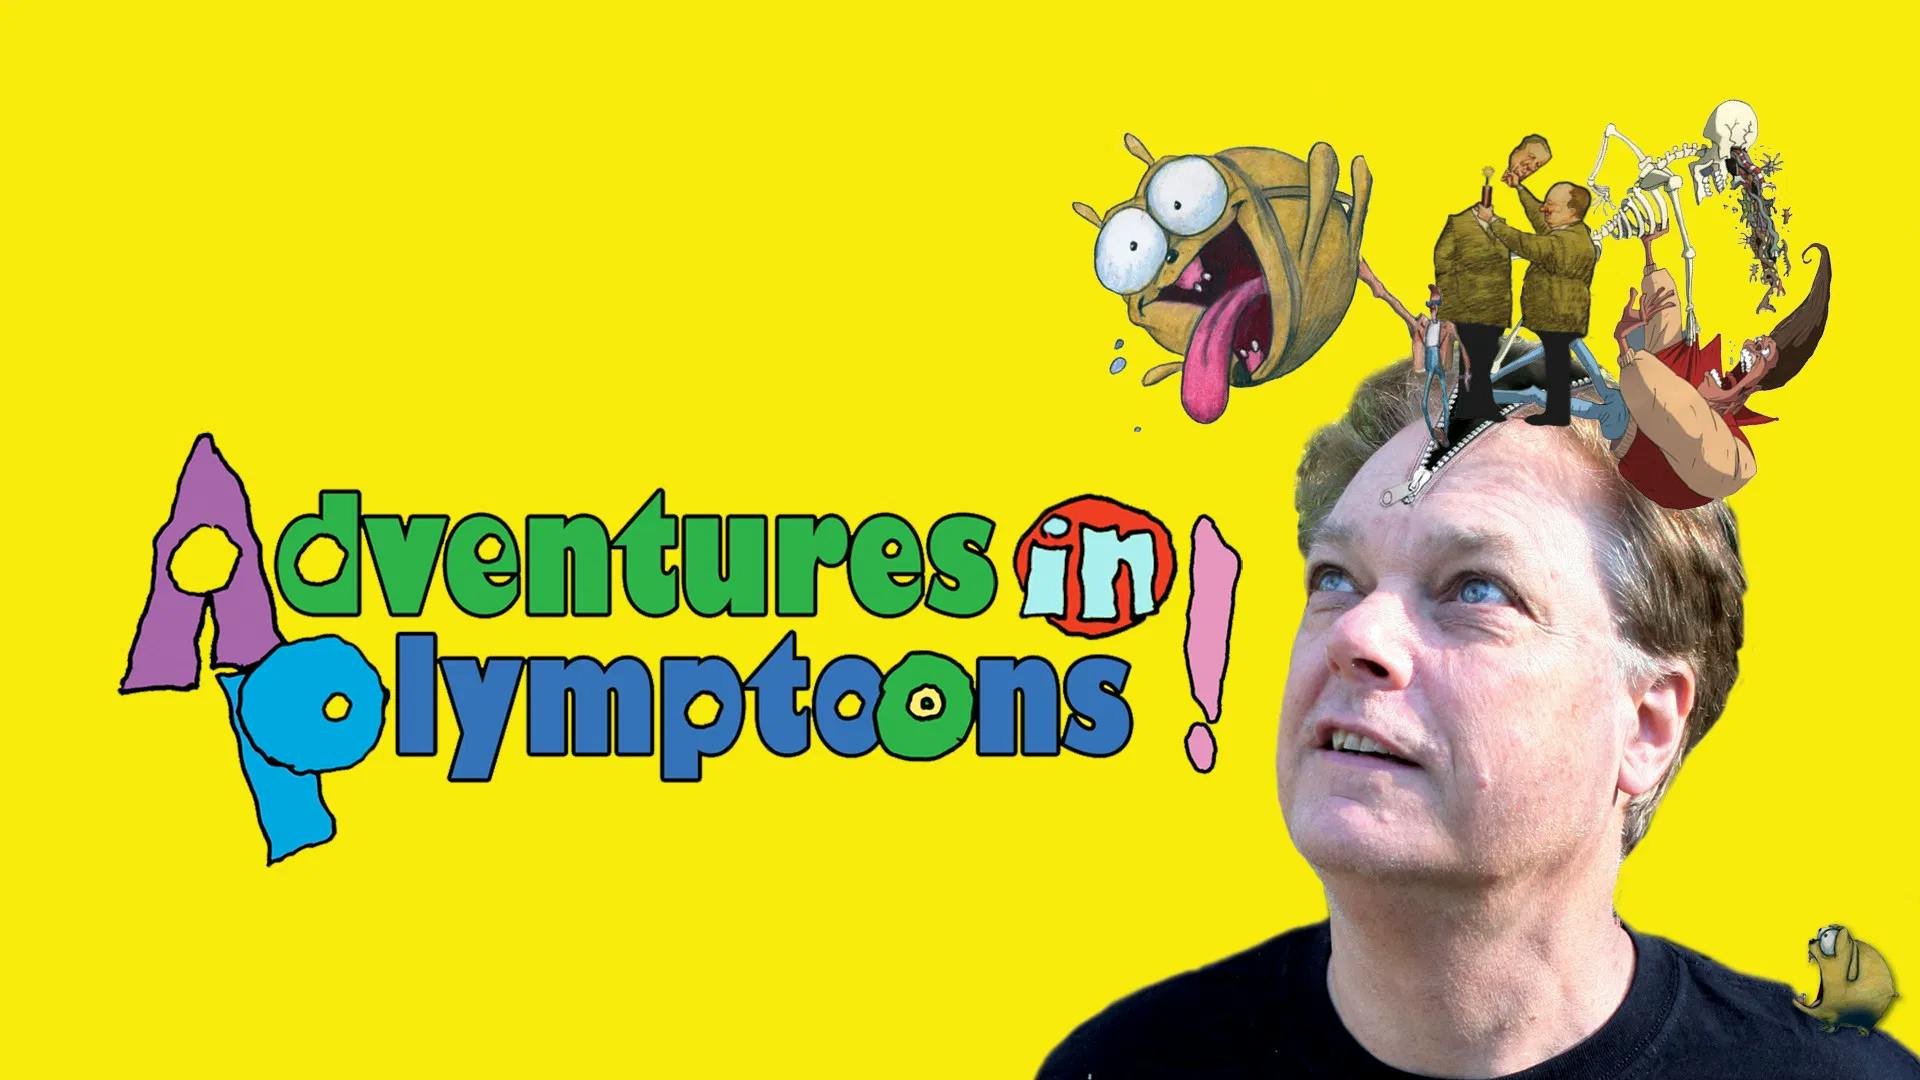 Adventures in Plymptoons!